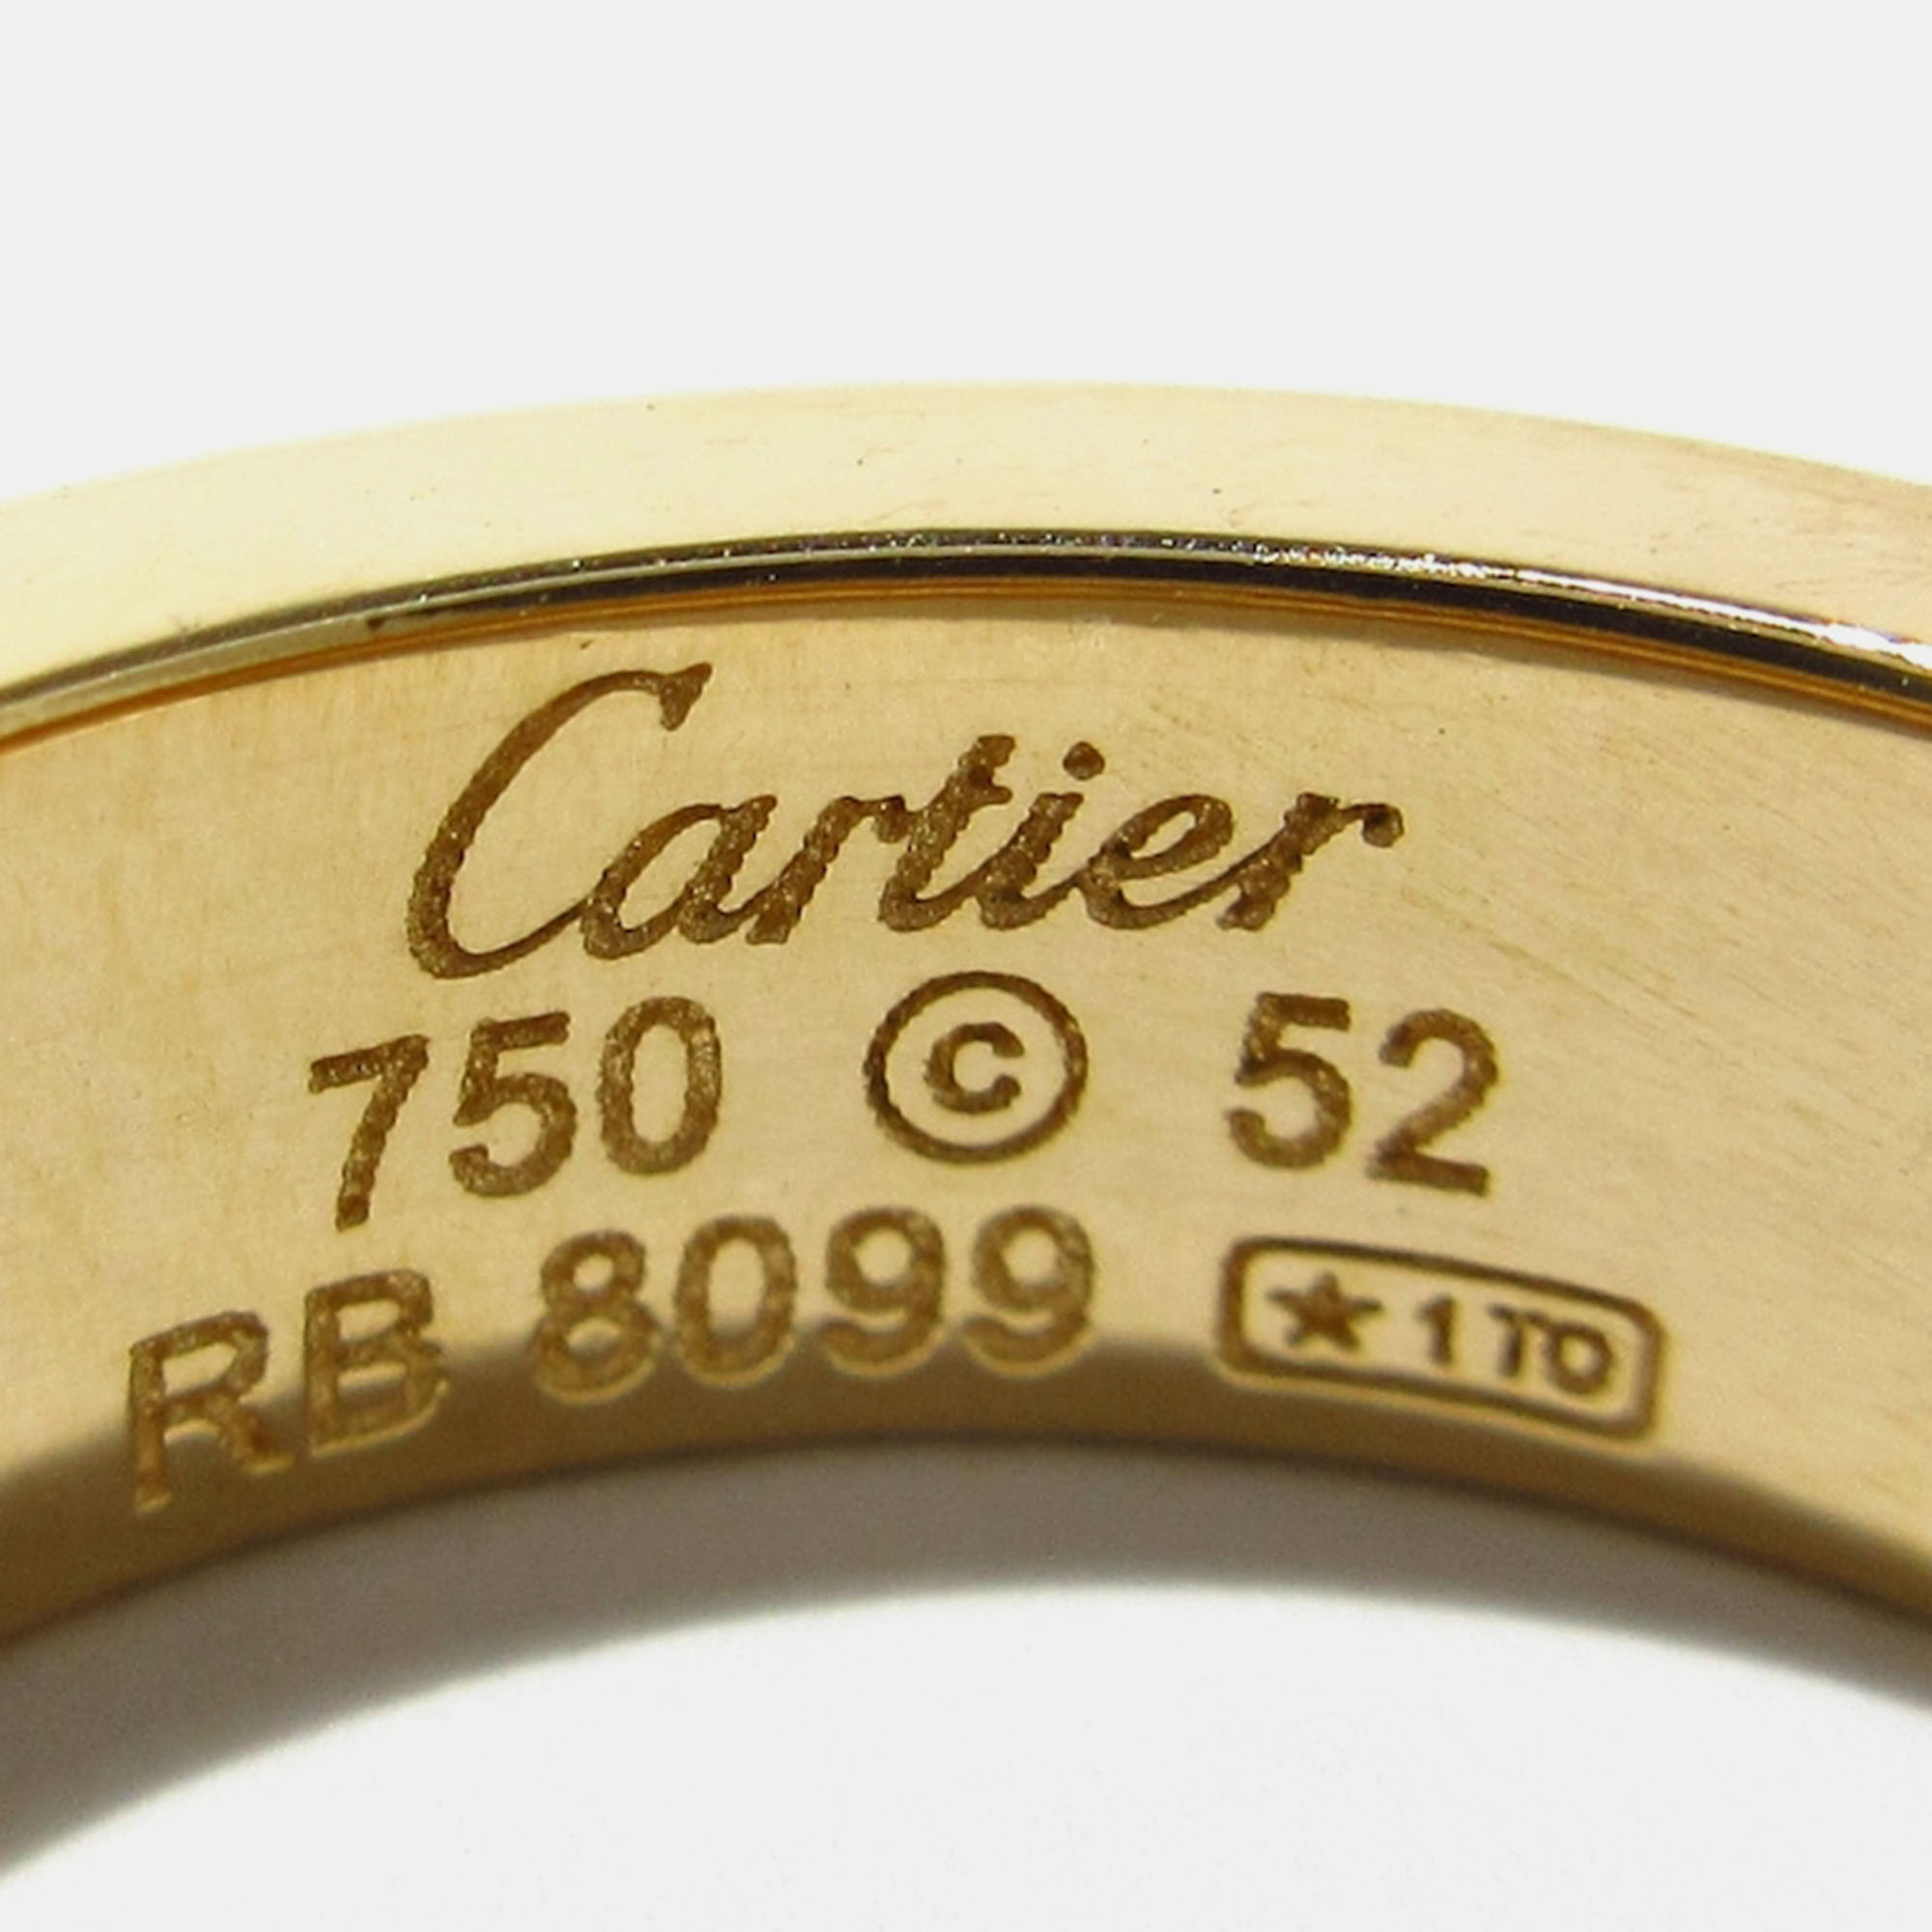 Cartier Love 18K Rose Gold Diamond Ring EU 52